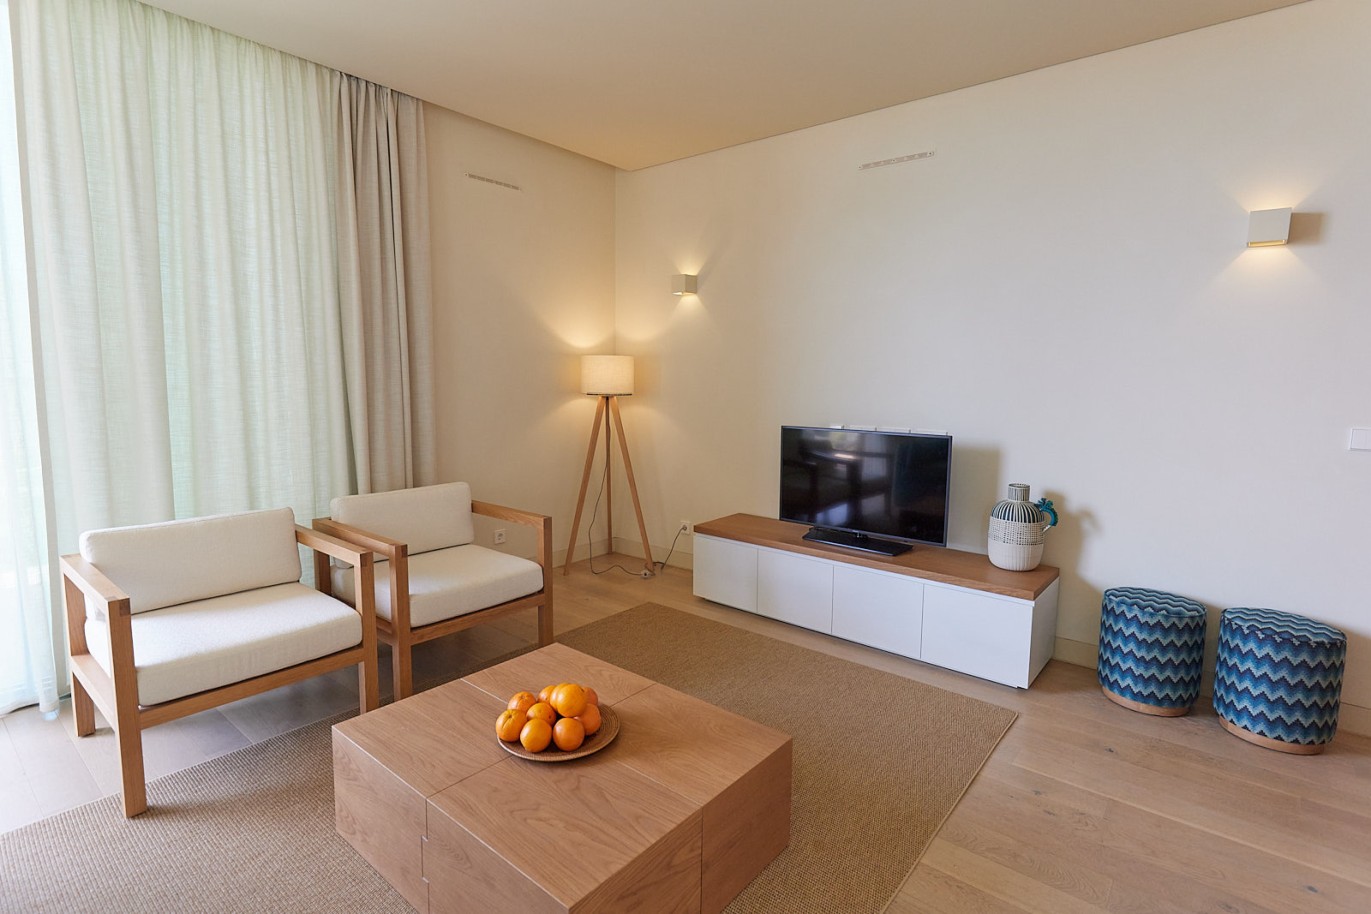 2 bedroom apartment in resort, for sale in Porches, Algarve_229232